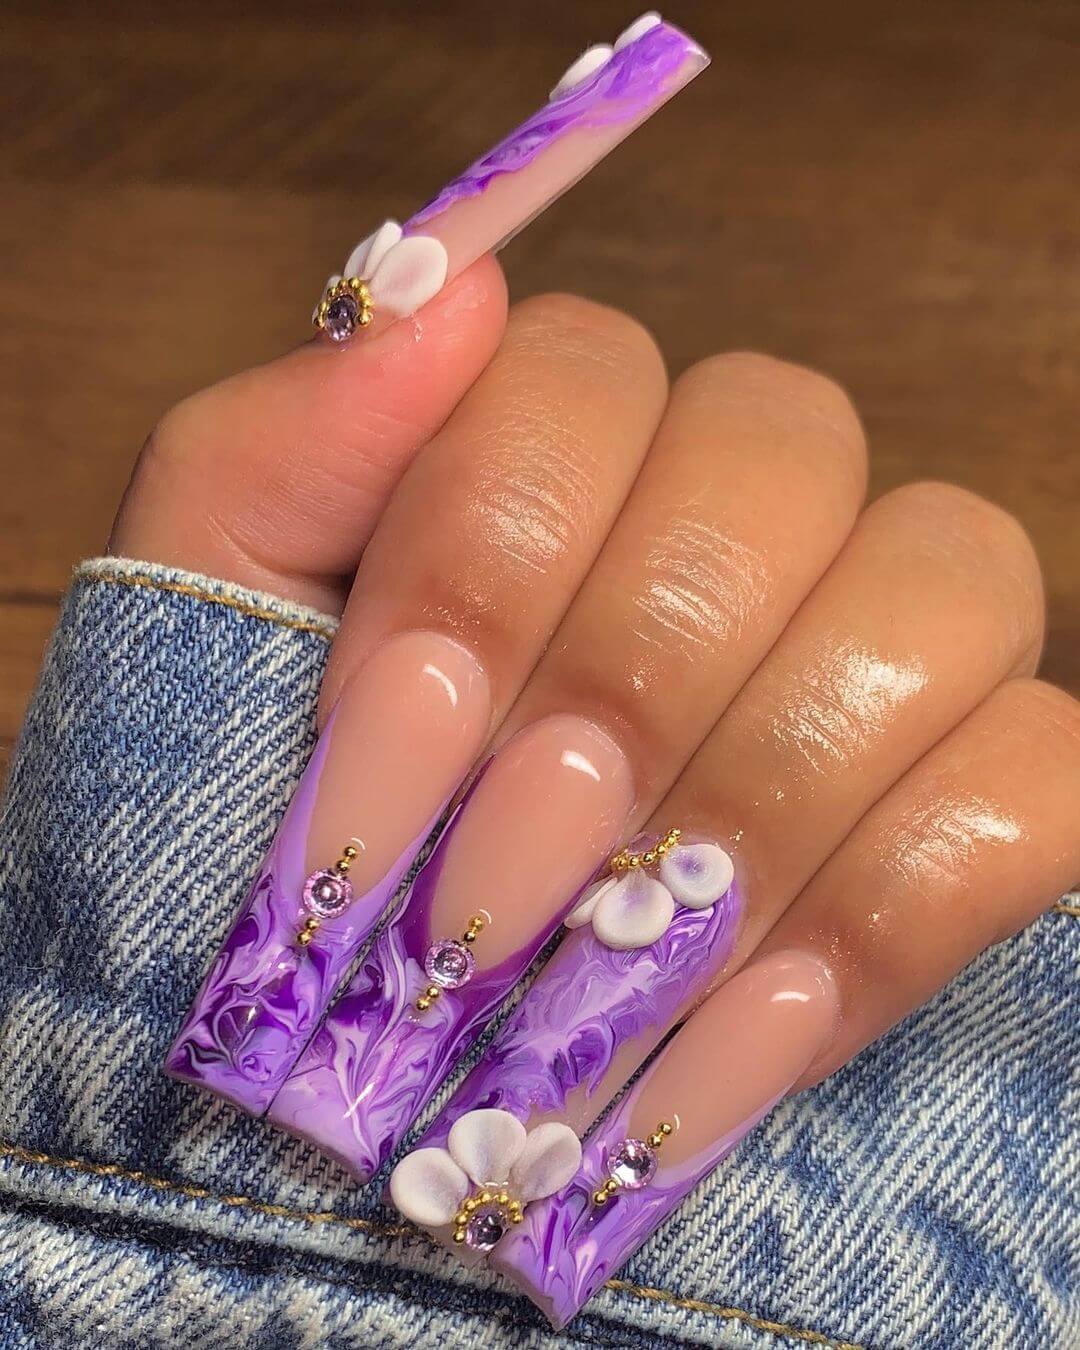 Jewelled purple nail art design